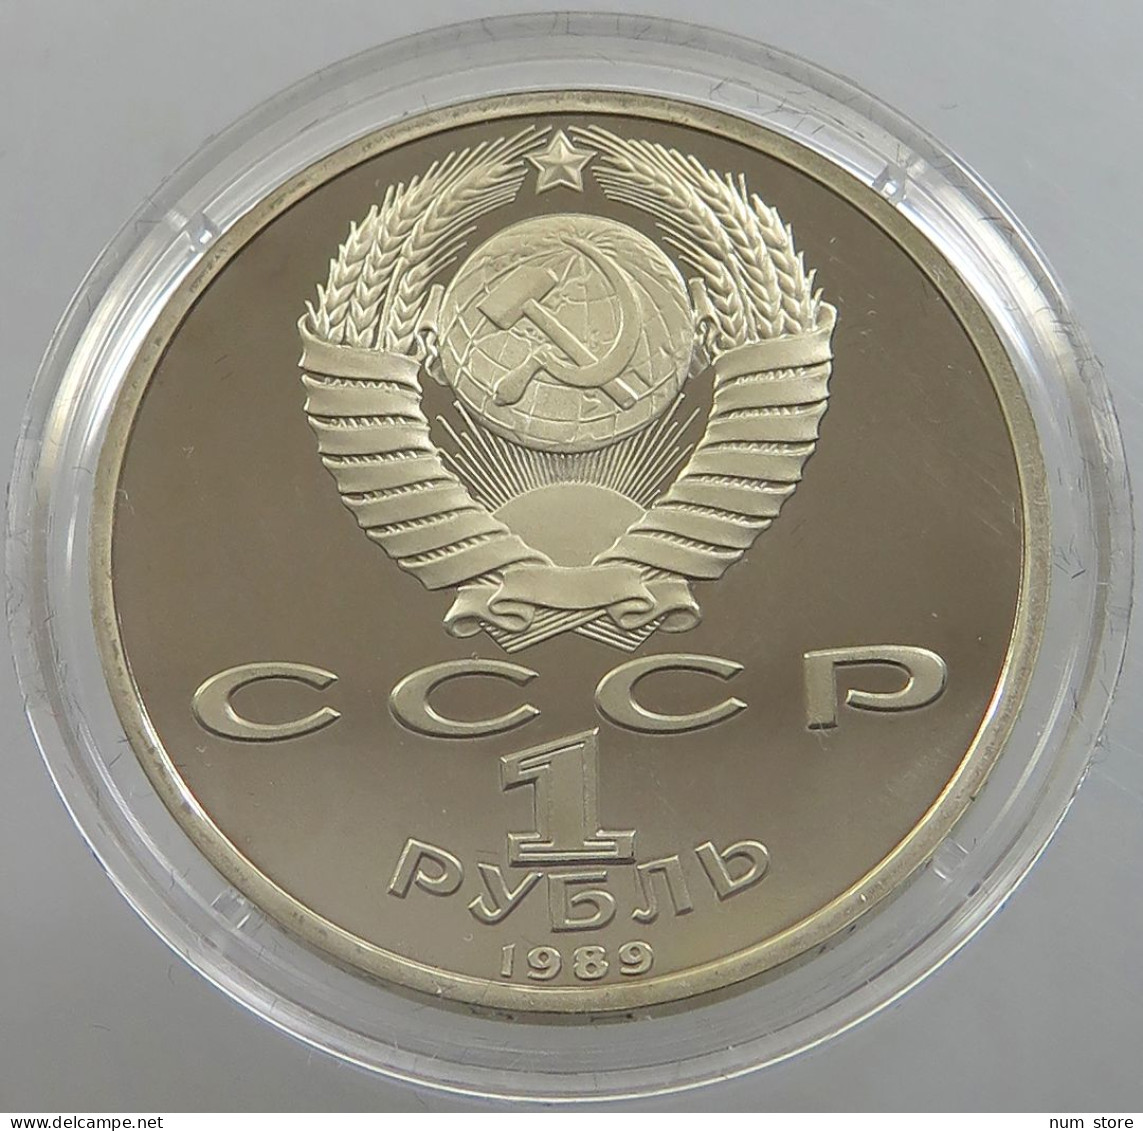 RUSSIA USSR 1 ROUBLE 1989 Mussorgskij PROOF #sm14 0757 - Russia